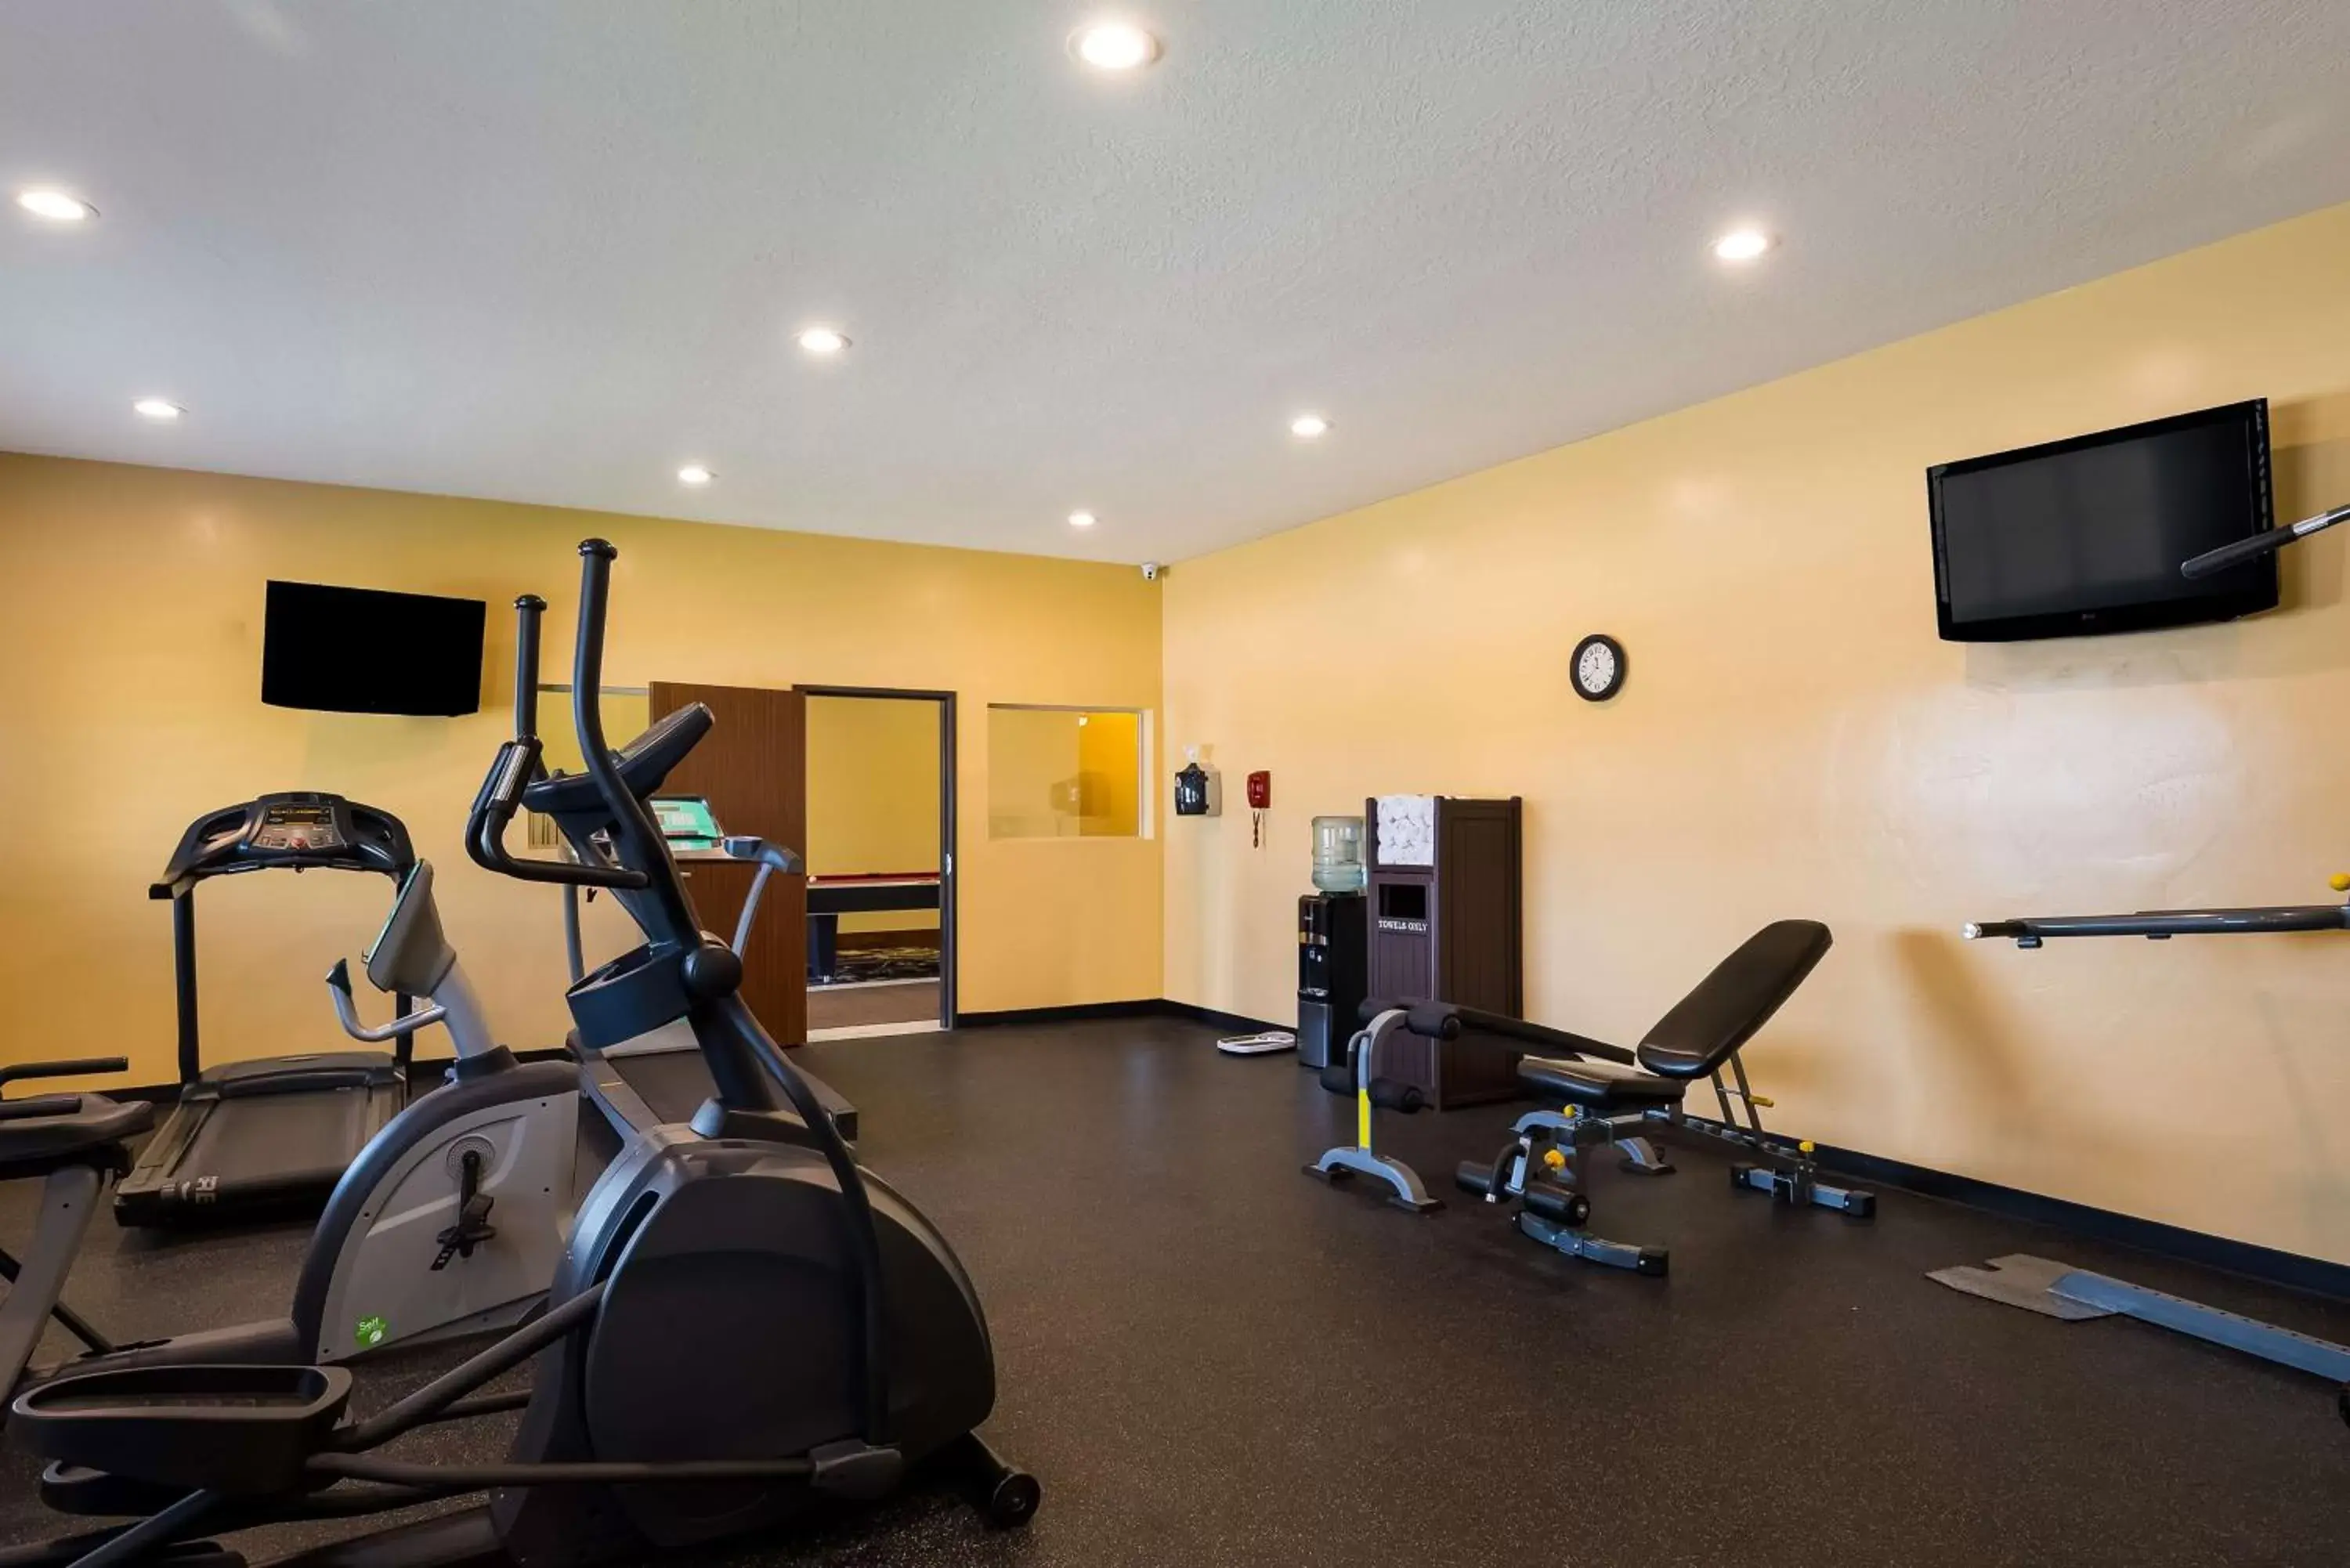 Fitness centre/facilities, Fitness Center/Facilities in Best Western Plus Landmark Hotel